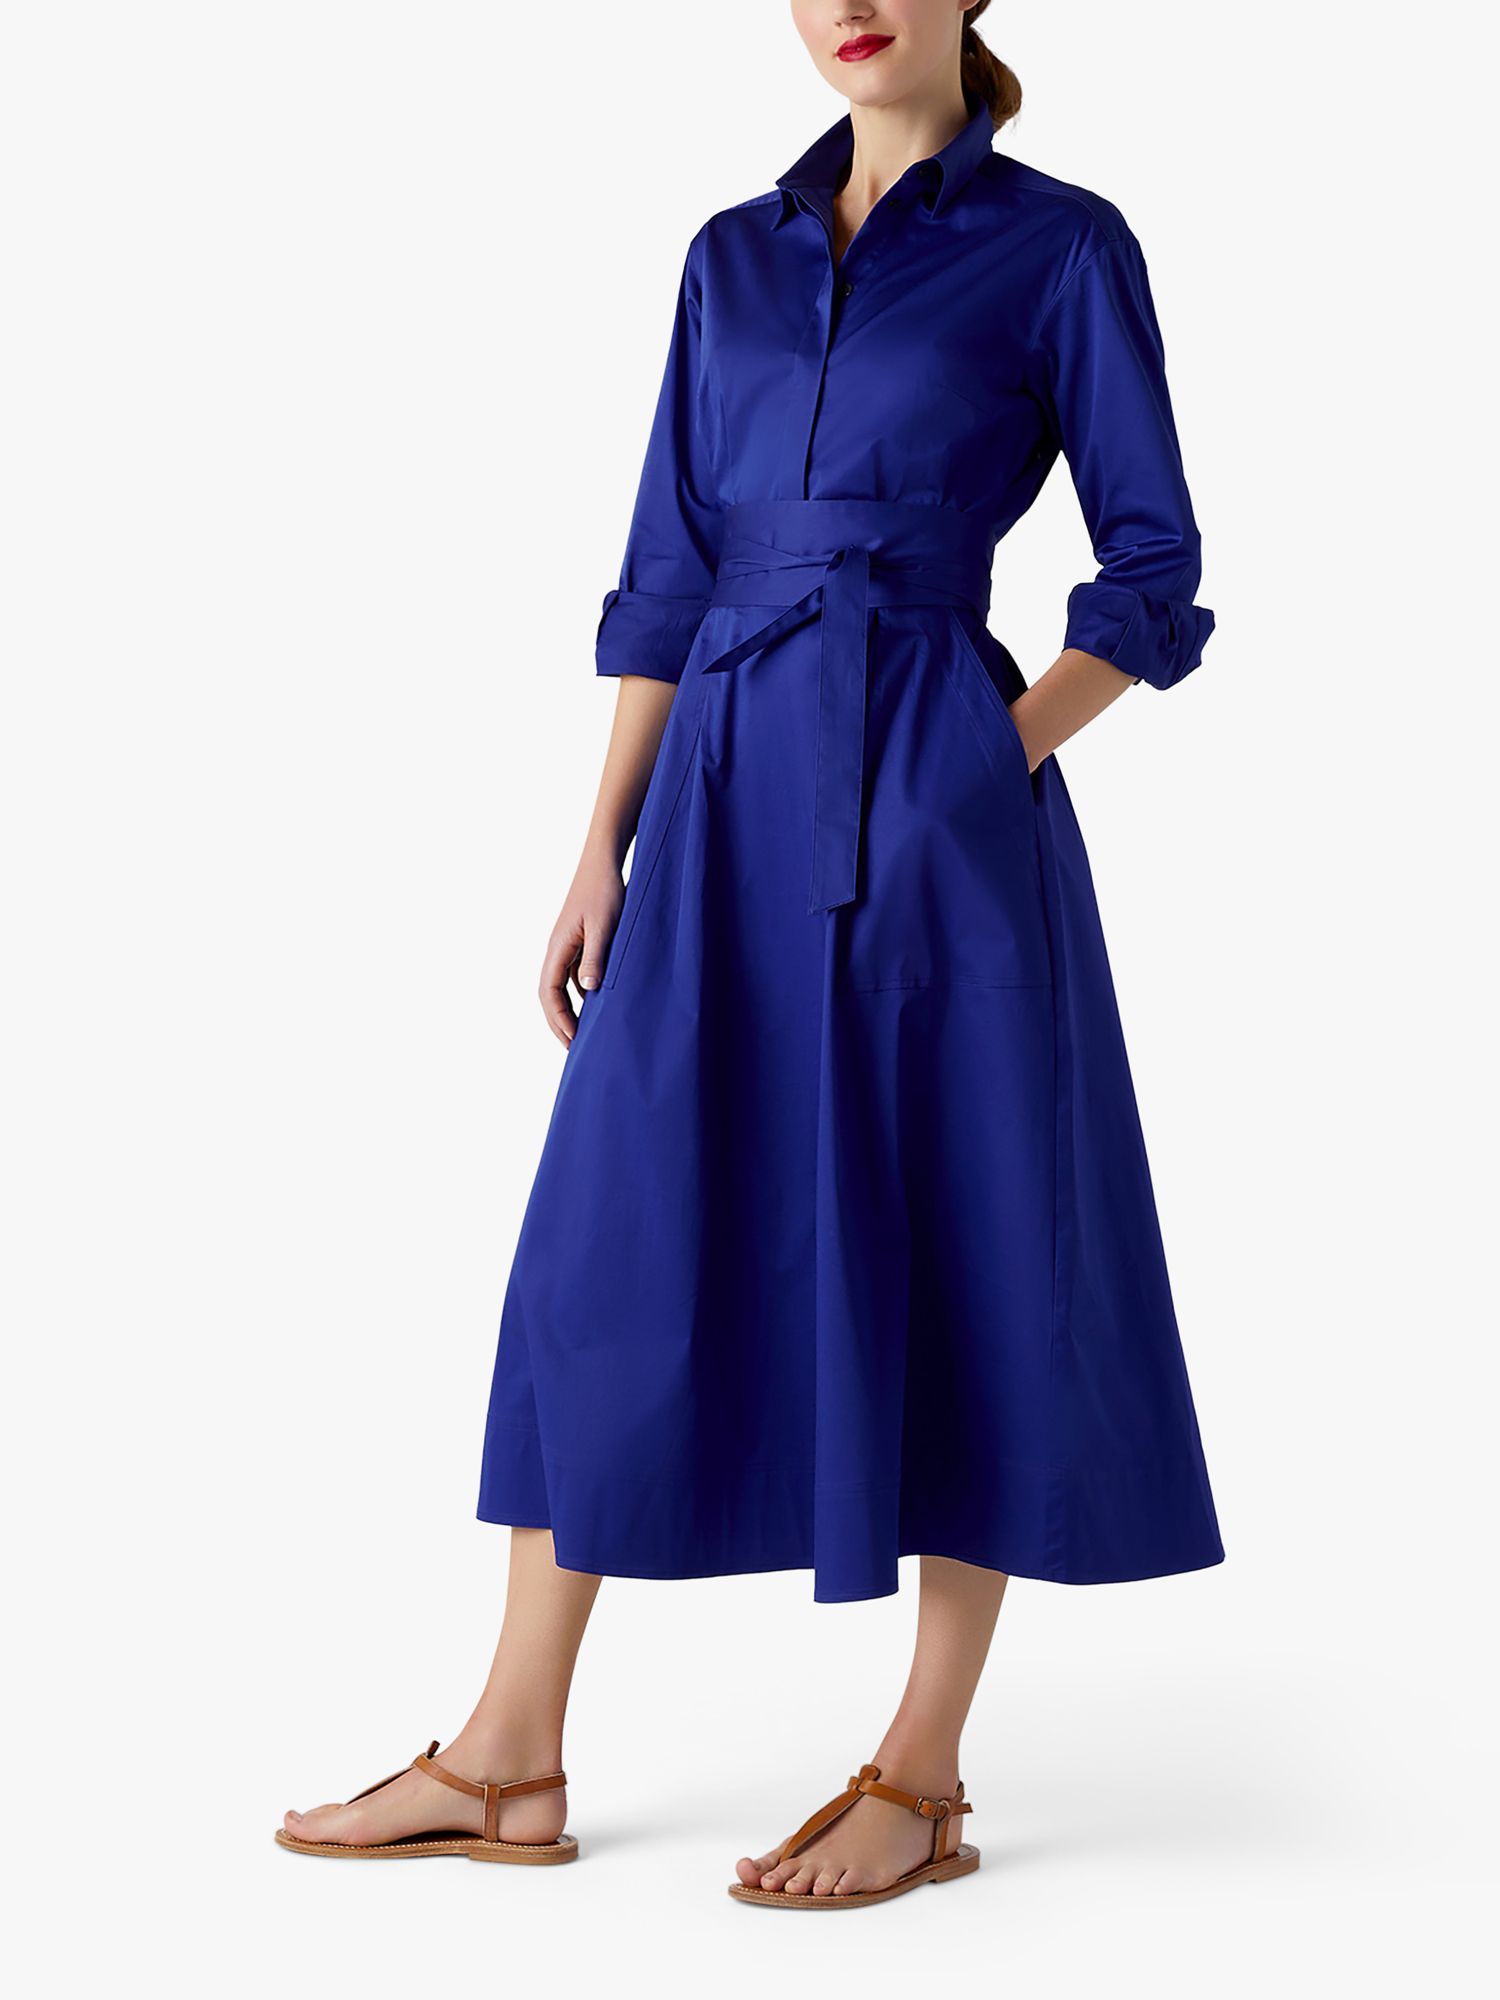 Jasper Conran Blythe Shirt Midi Dress, Royal Blue at John Lewis & Partners